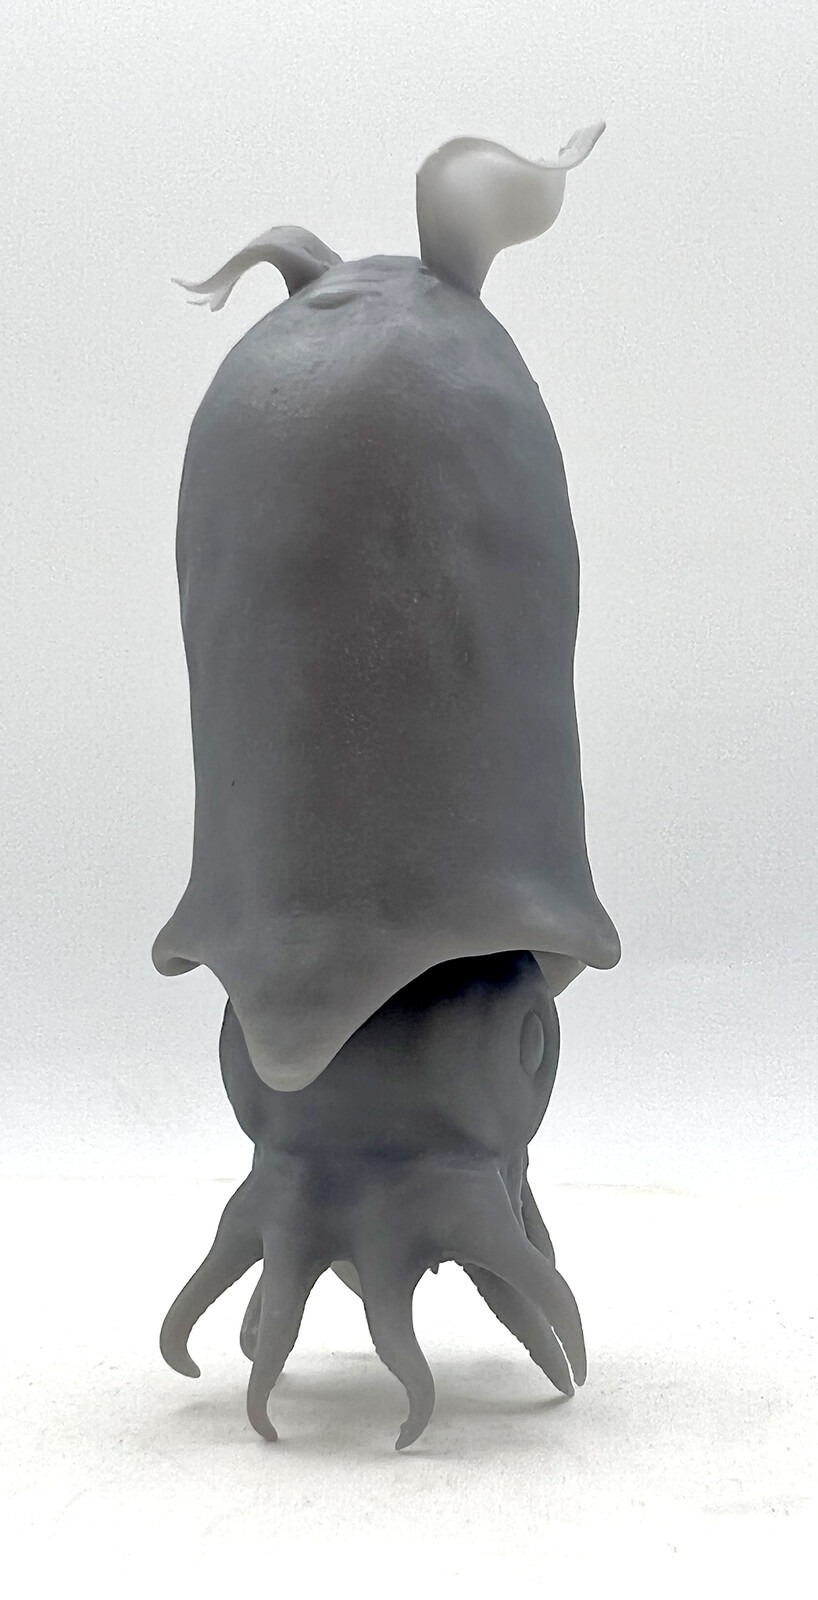 3d Print of Ram's Horn Squid in grey resin